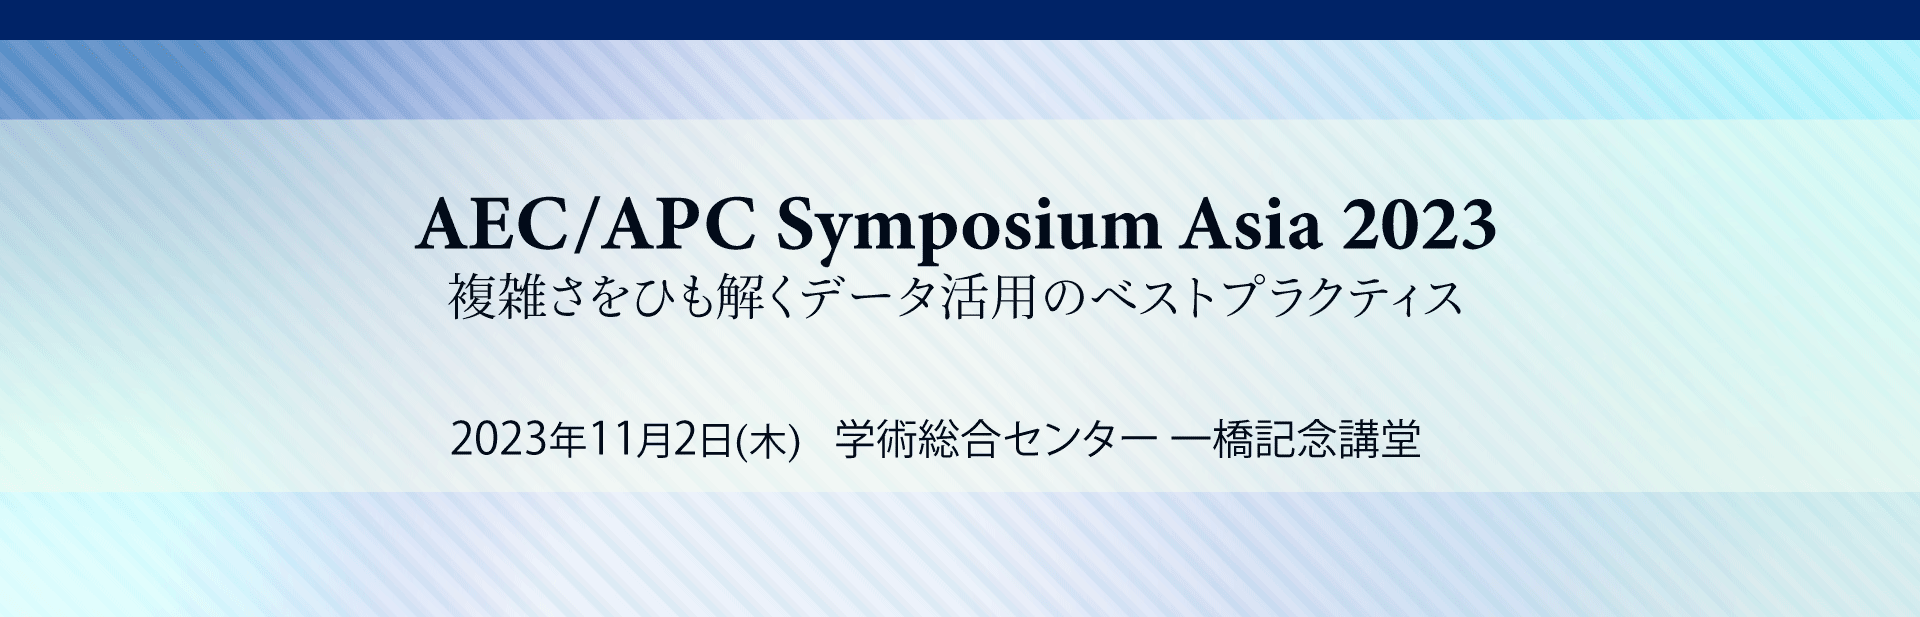 AEC/APC Symposium Asia 2023 -GЂf[^p̃xXgvNeBX